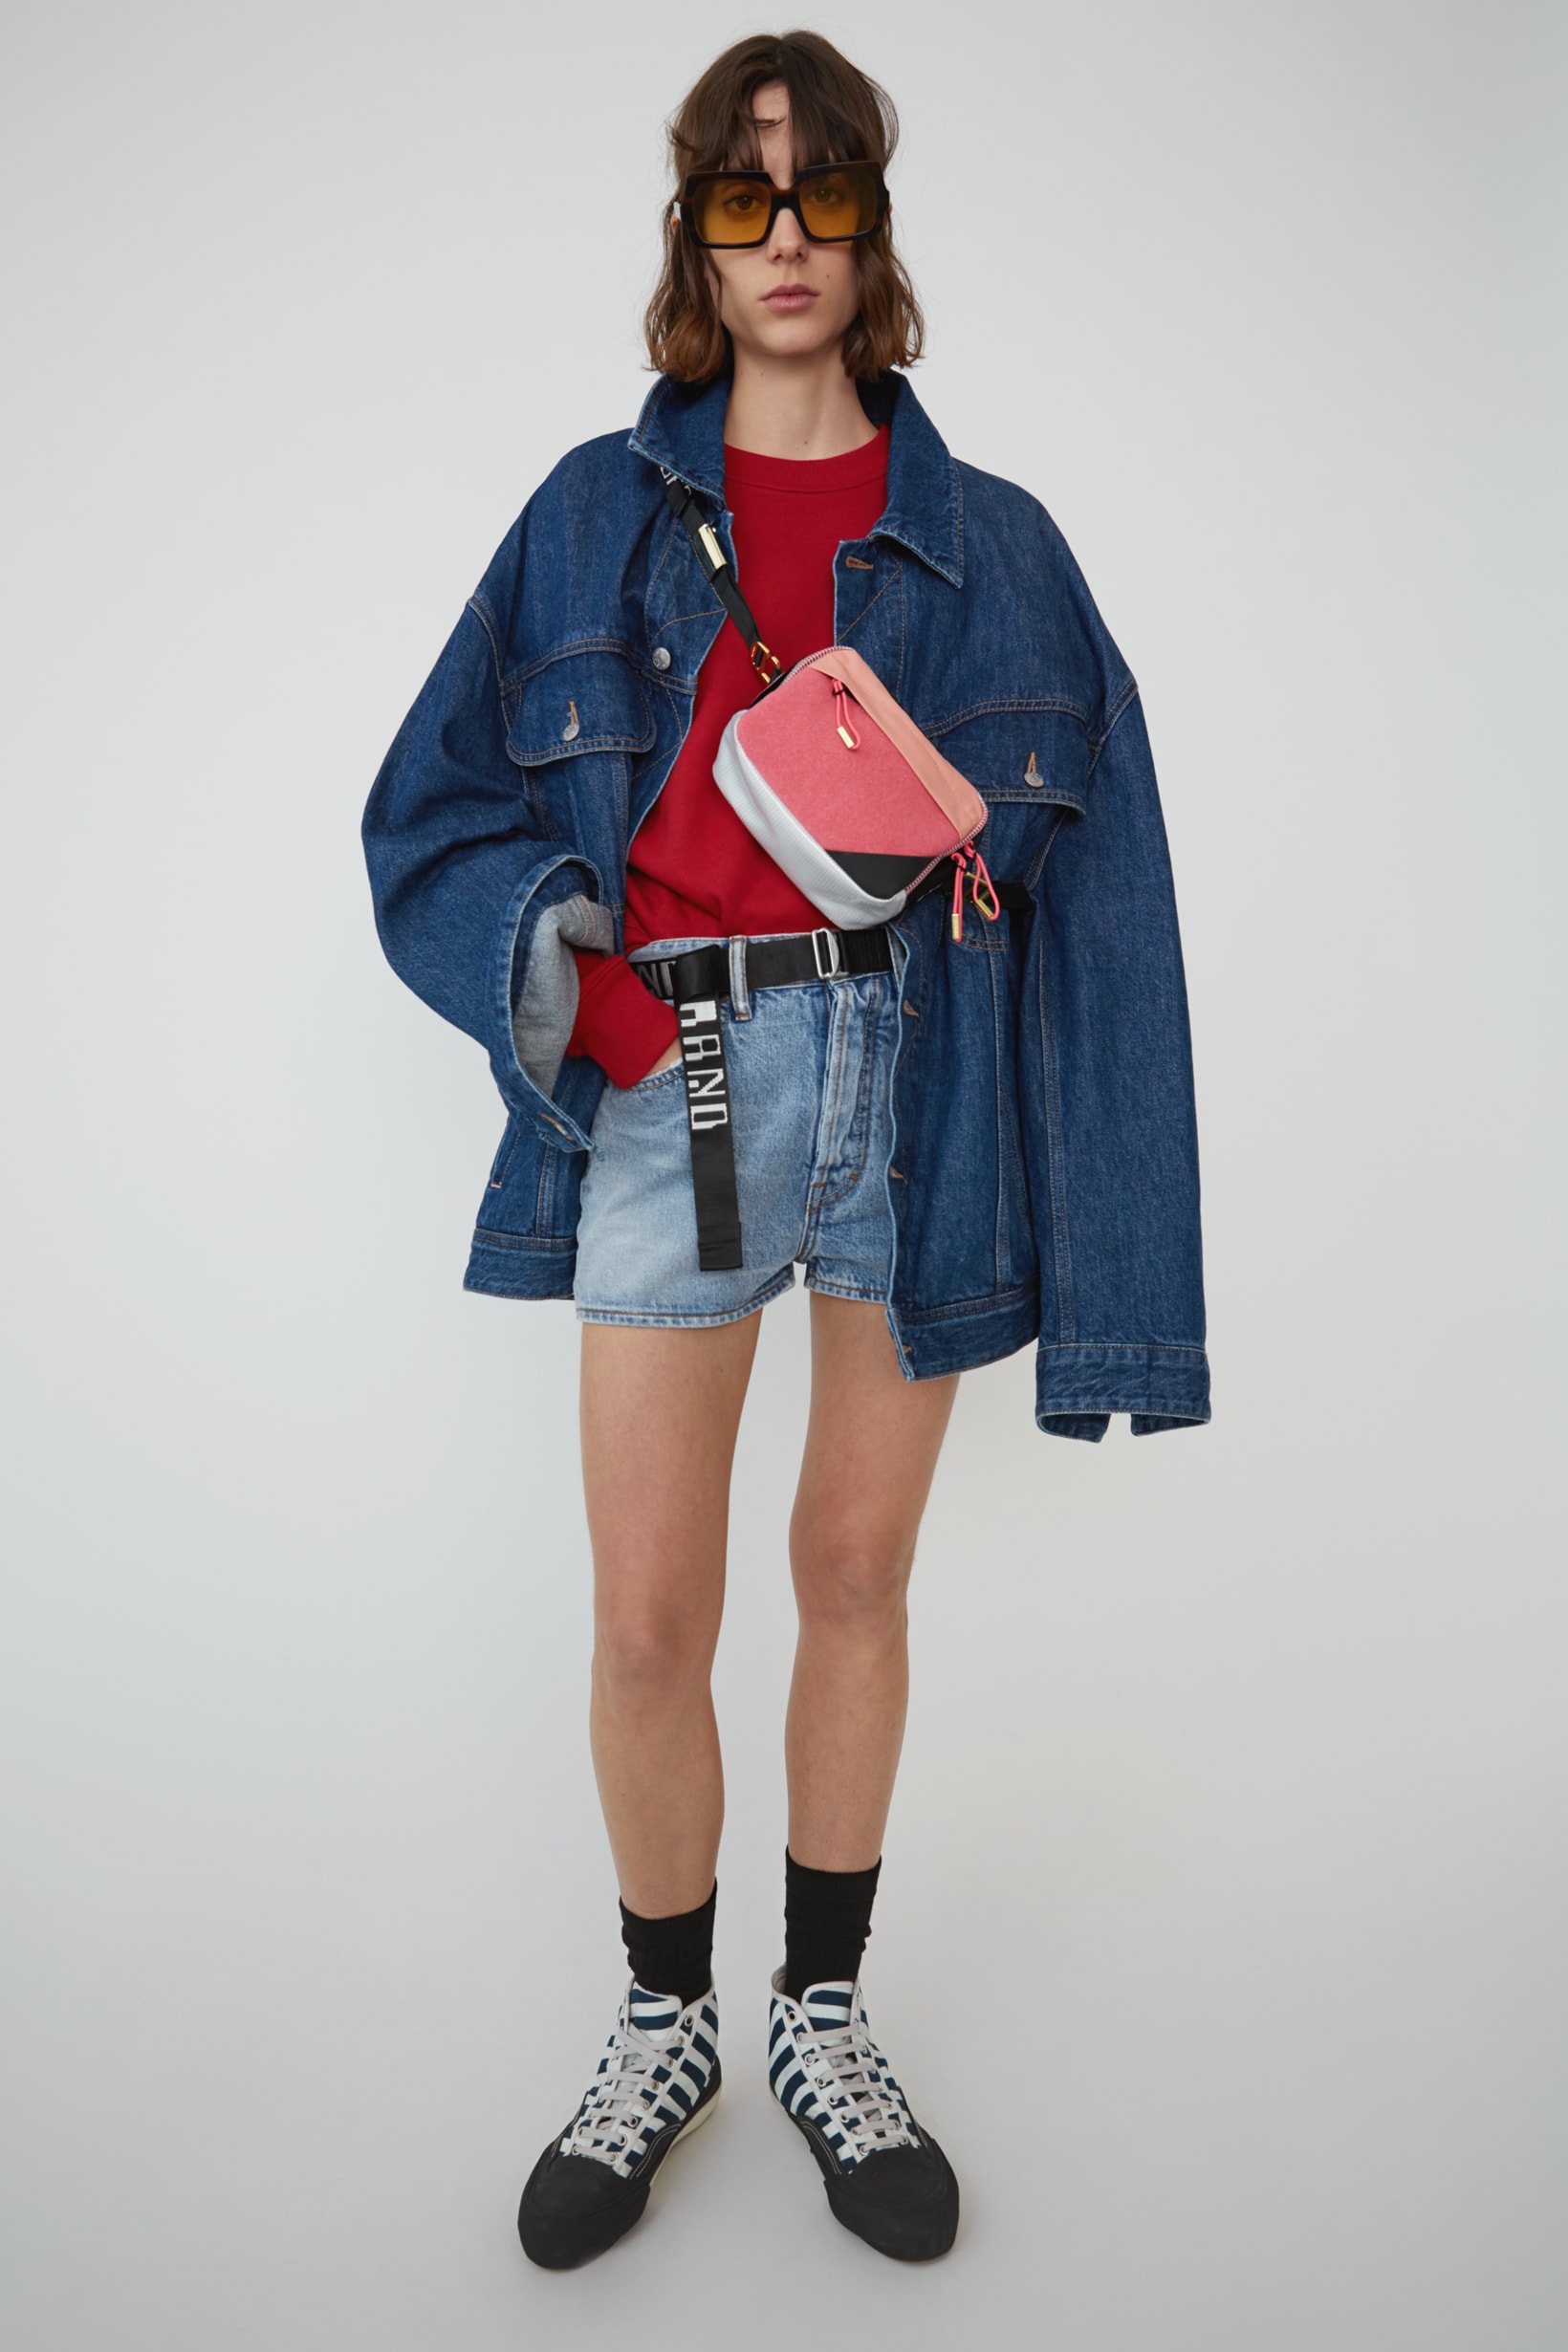 Acne Studios Spring Summer 2019 Denim Collection Jacket Shorts Blue Shirt Red